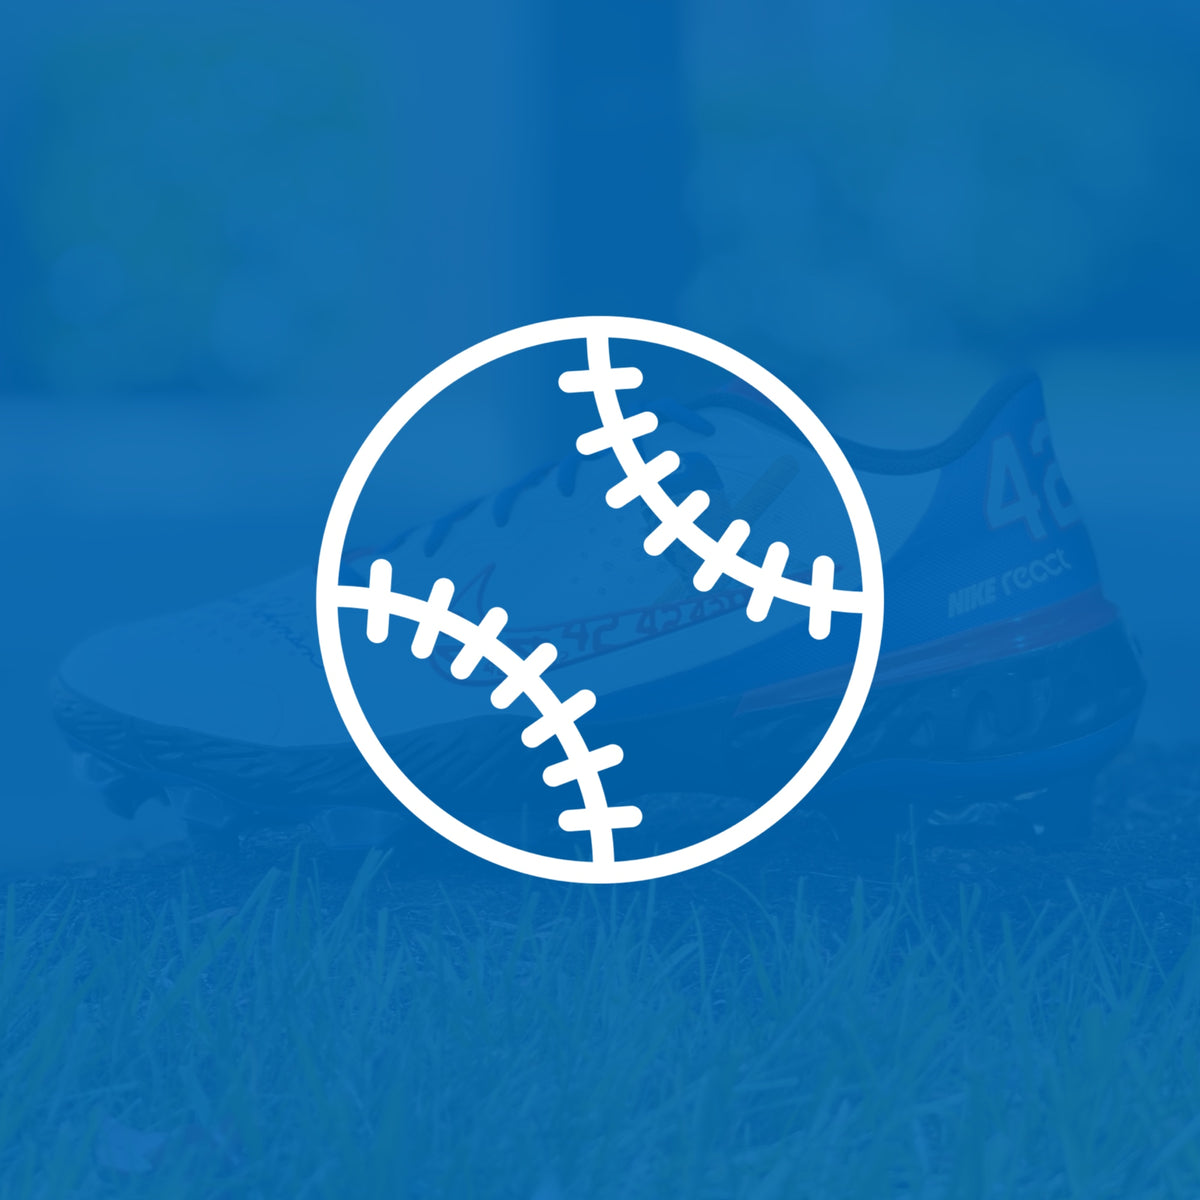 Better Baseball - The Acuña drip don't stop. - - - #baseballcleats